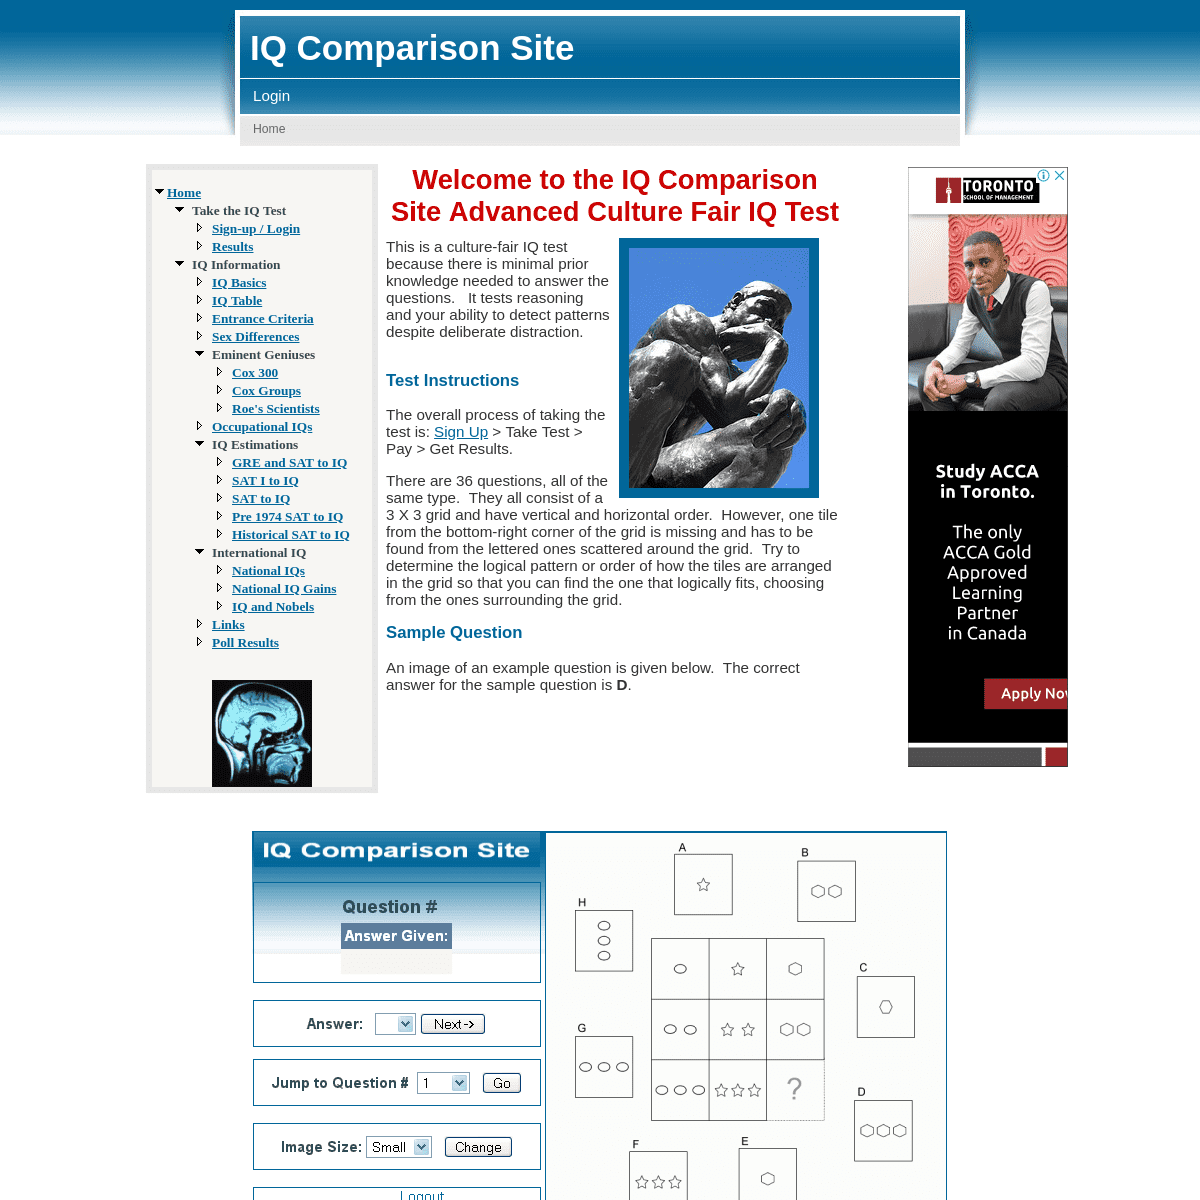 A complete backup of iqcomparisonsite.com